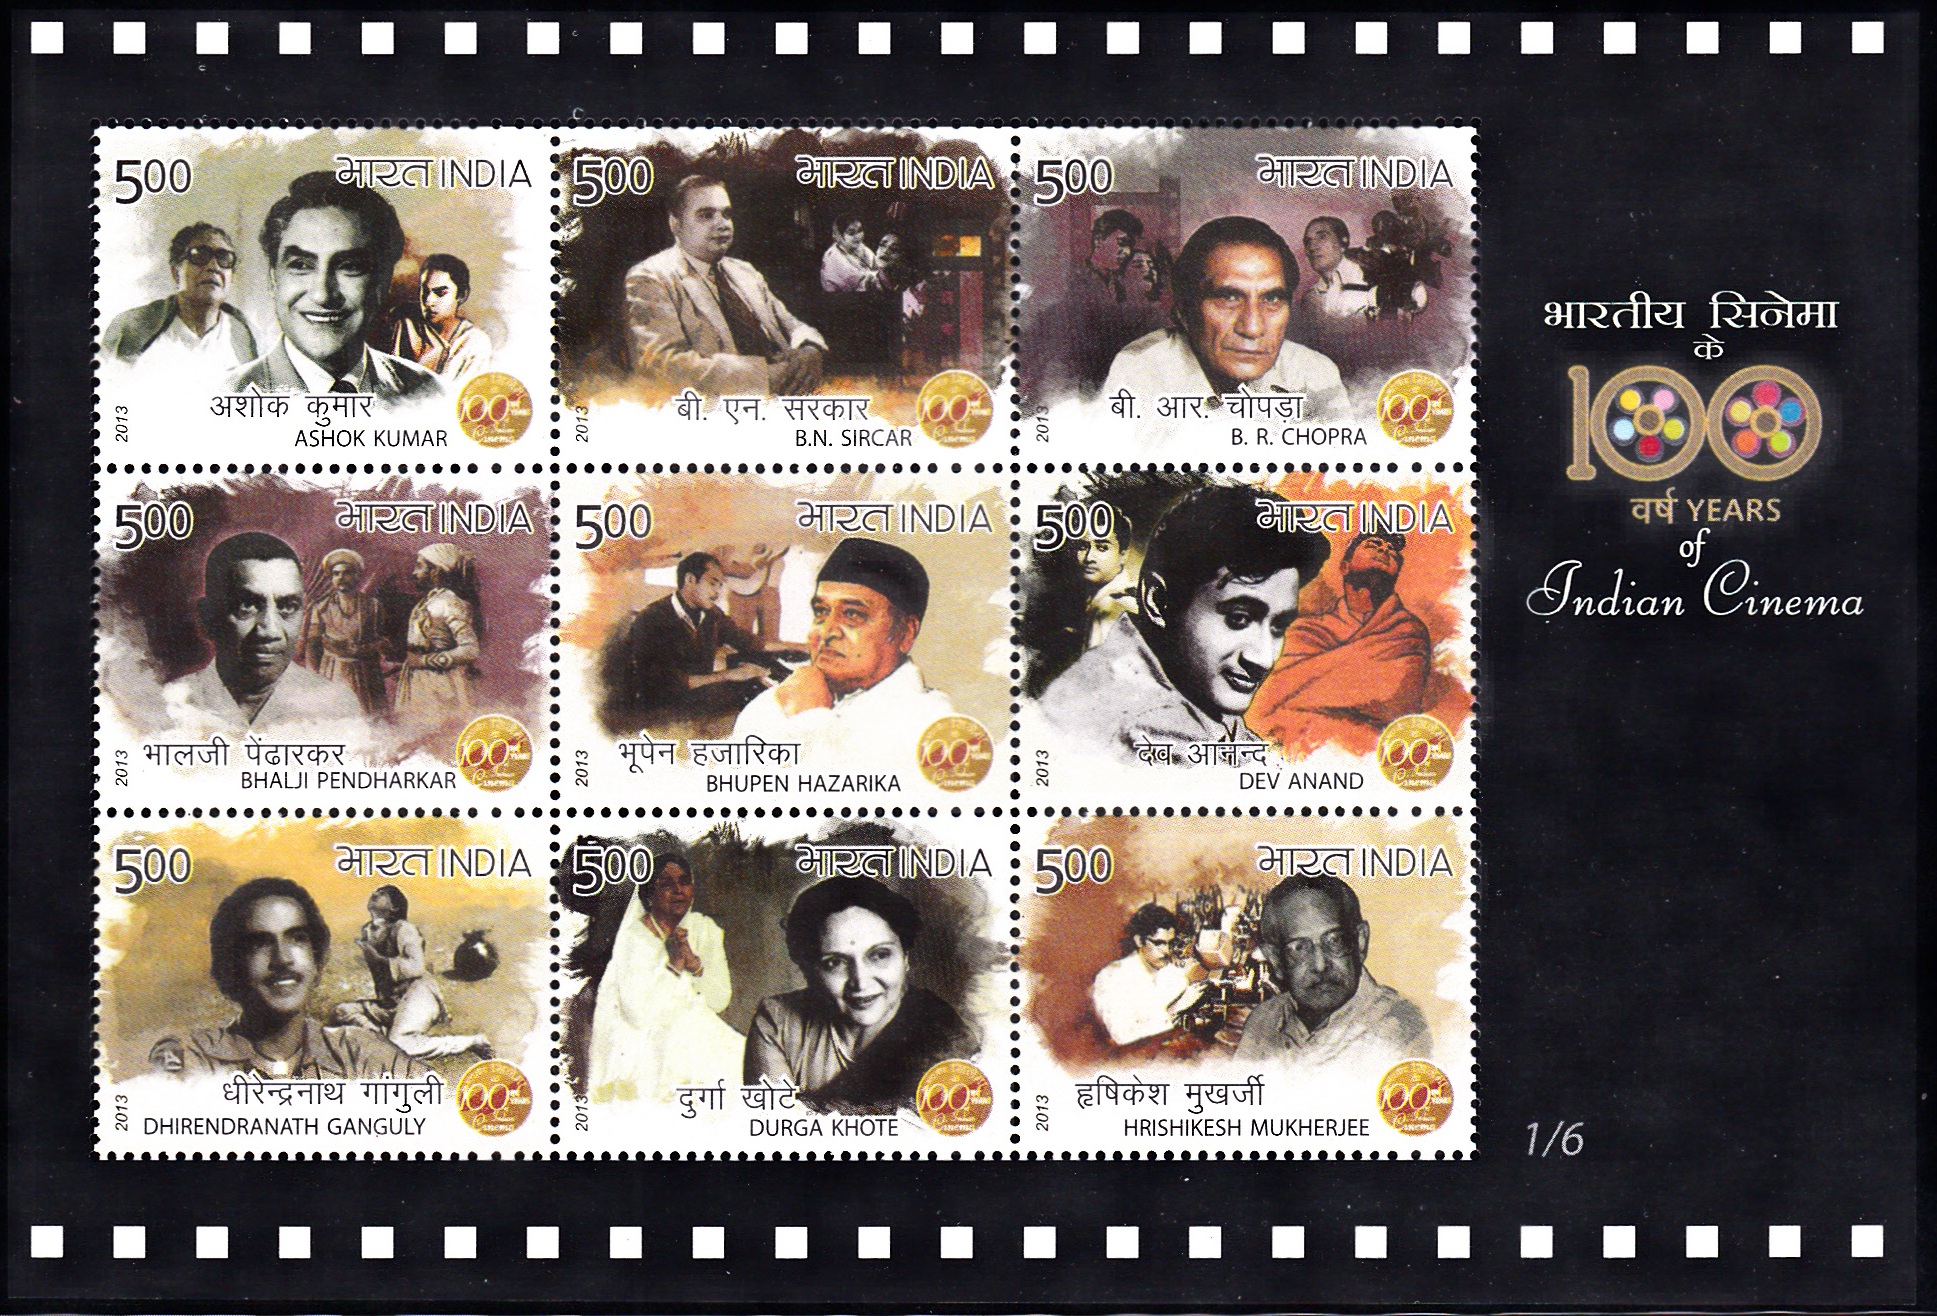 100 Years of Indian Cinema